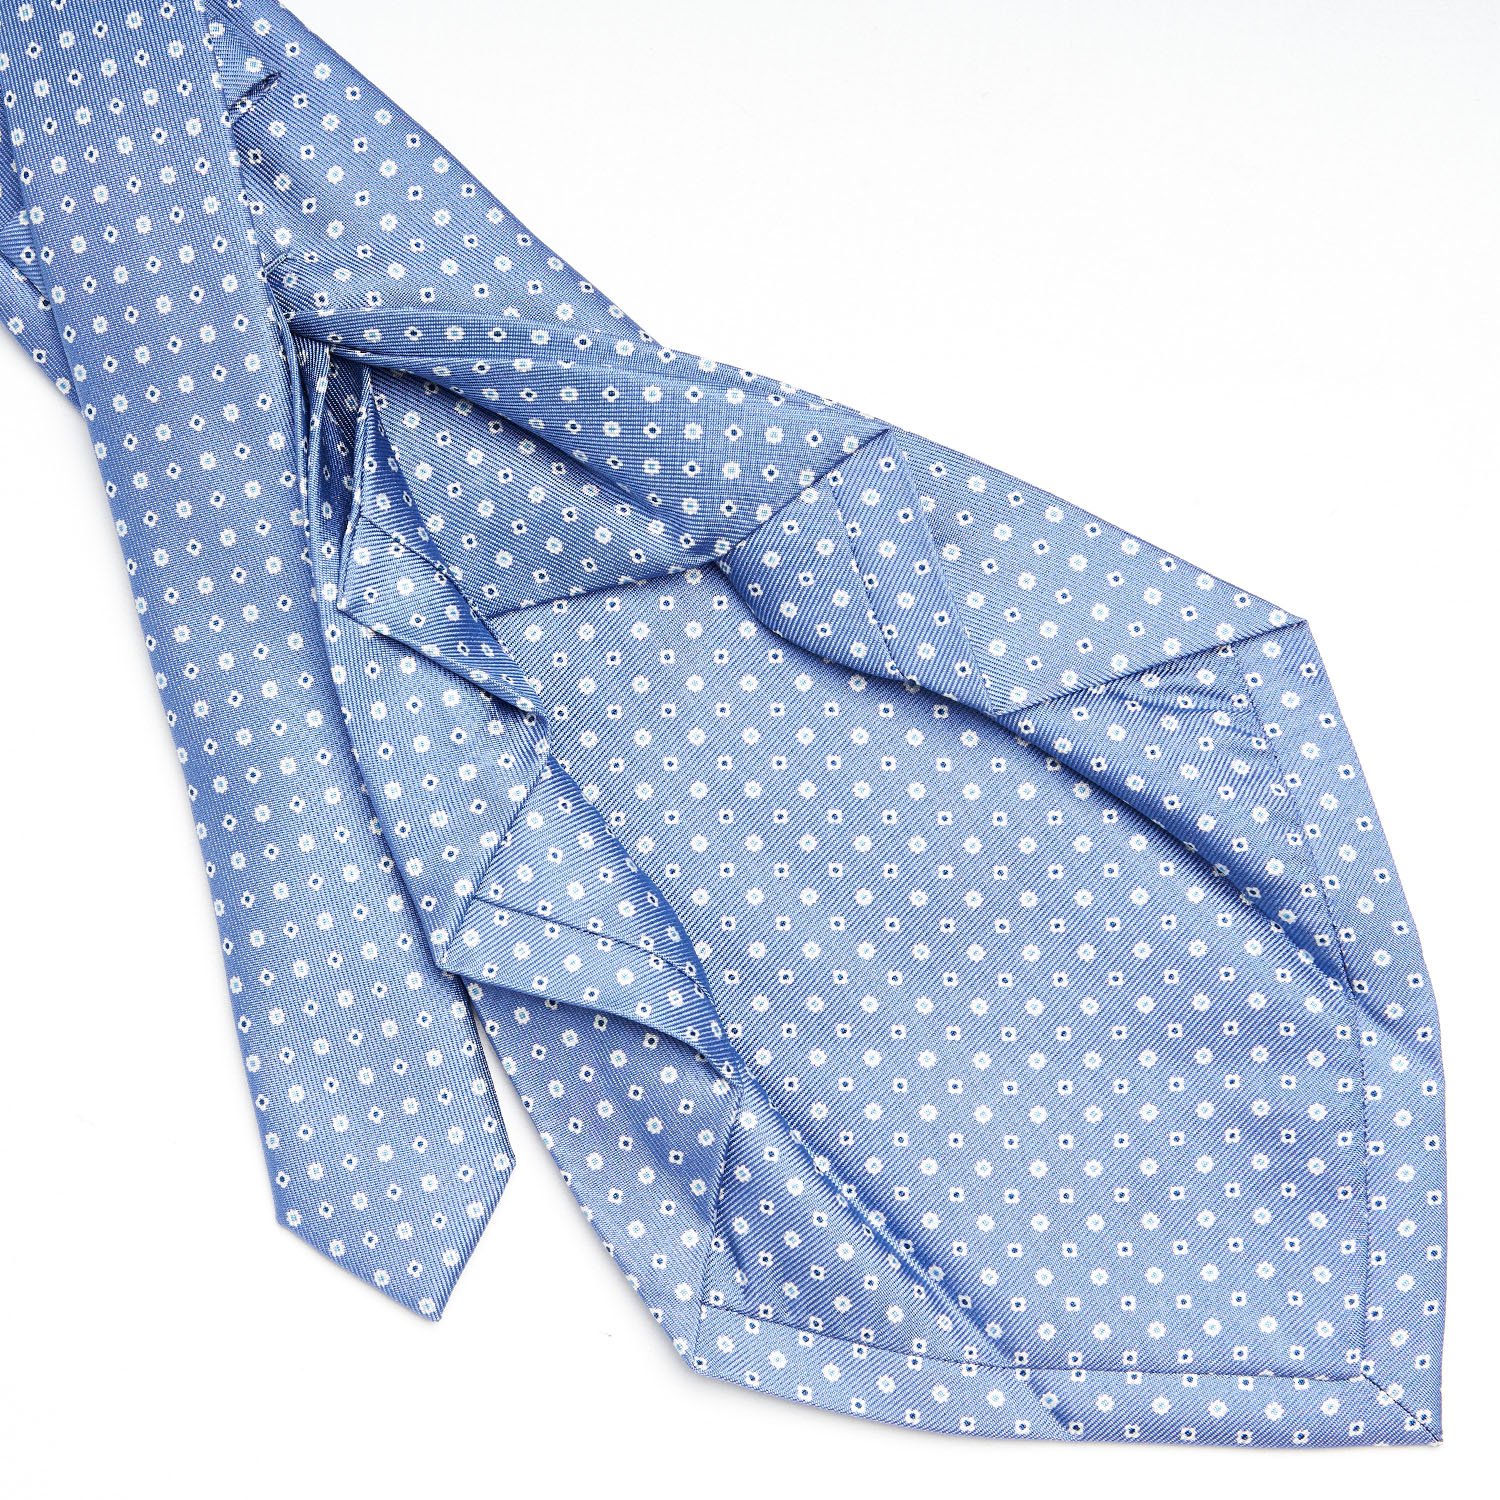 seven fold tie_cravatte 7 pieghe